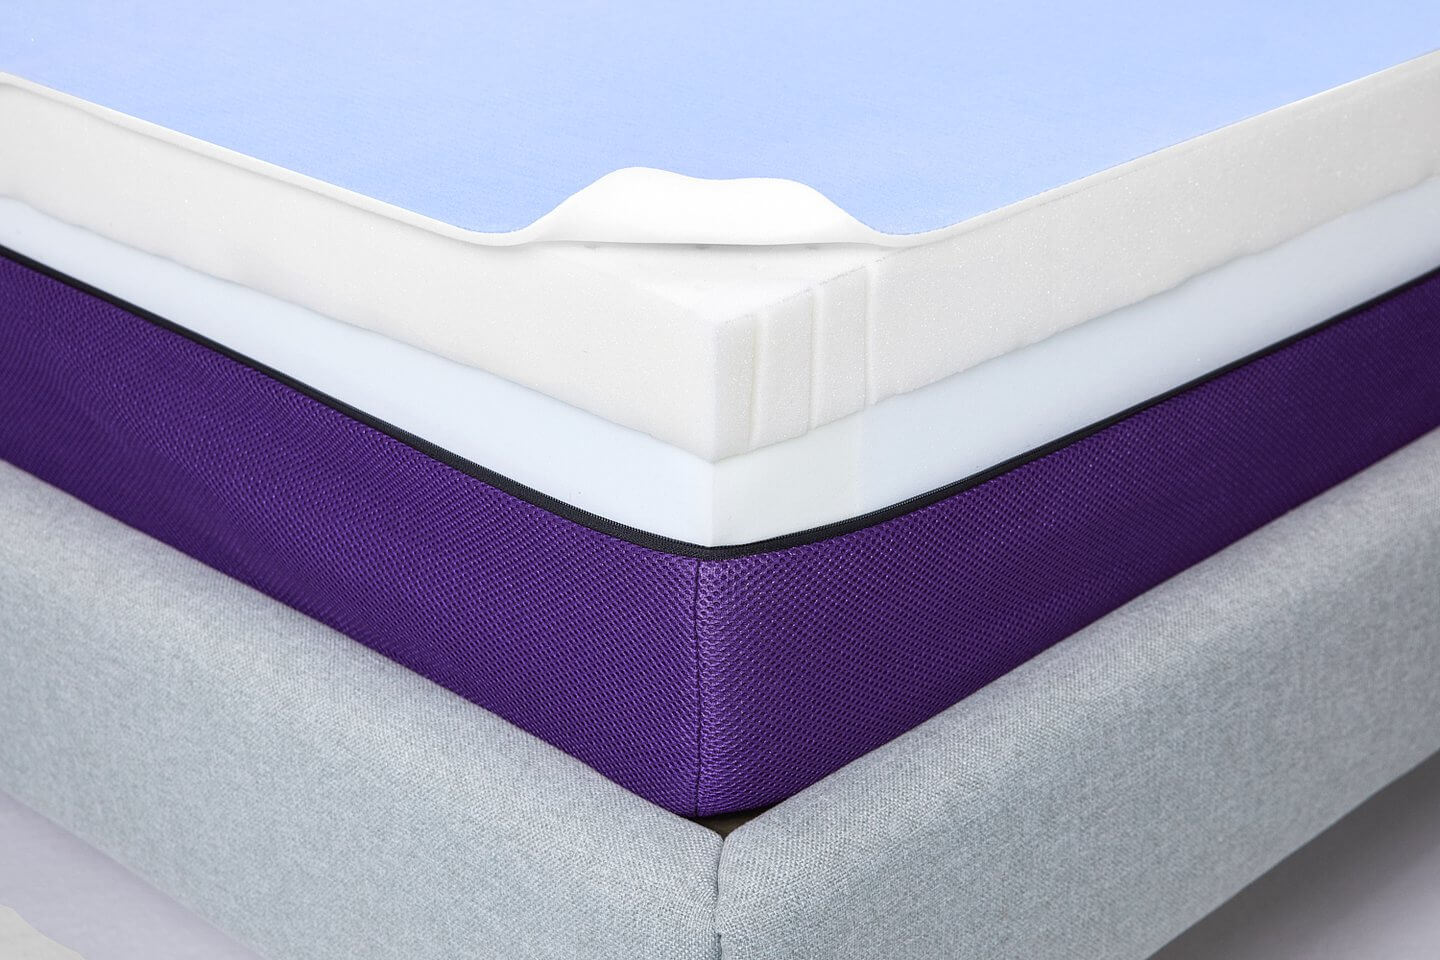 Folded corner of the Polysleep mattress protector on the Polysleep mattress topper